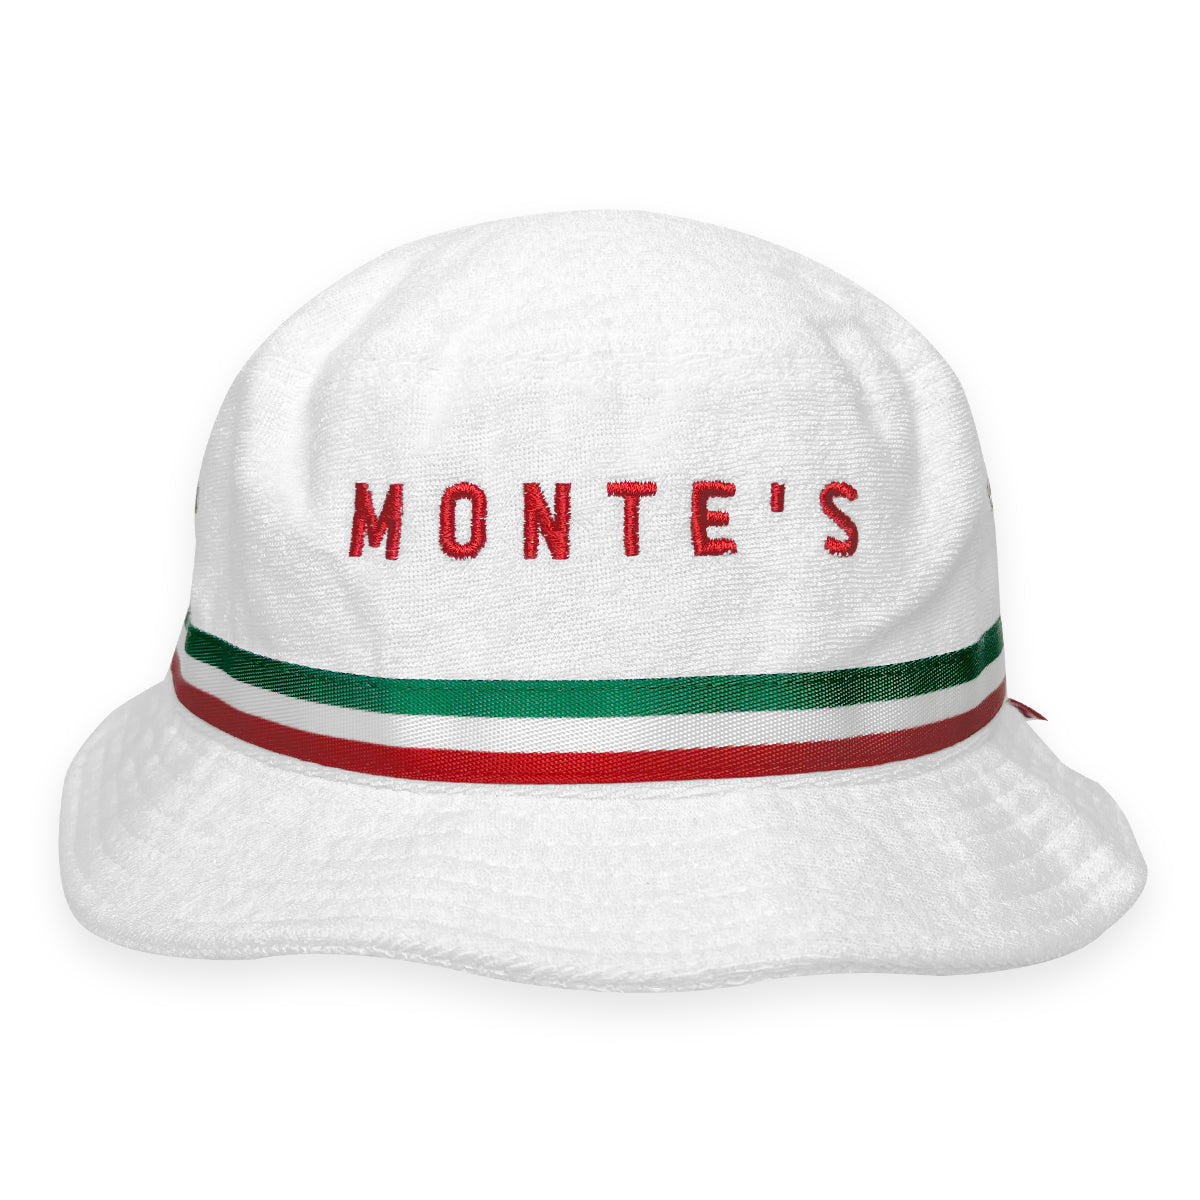 Monte's Bucket Hat